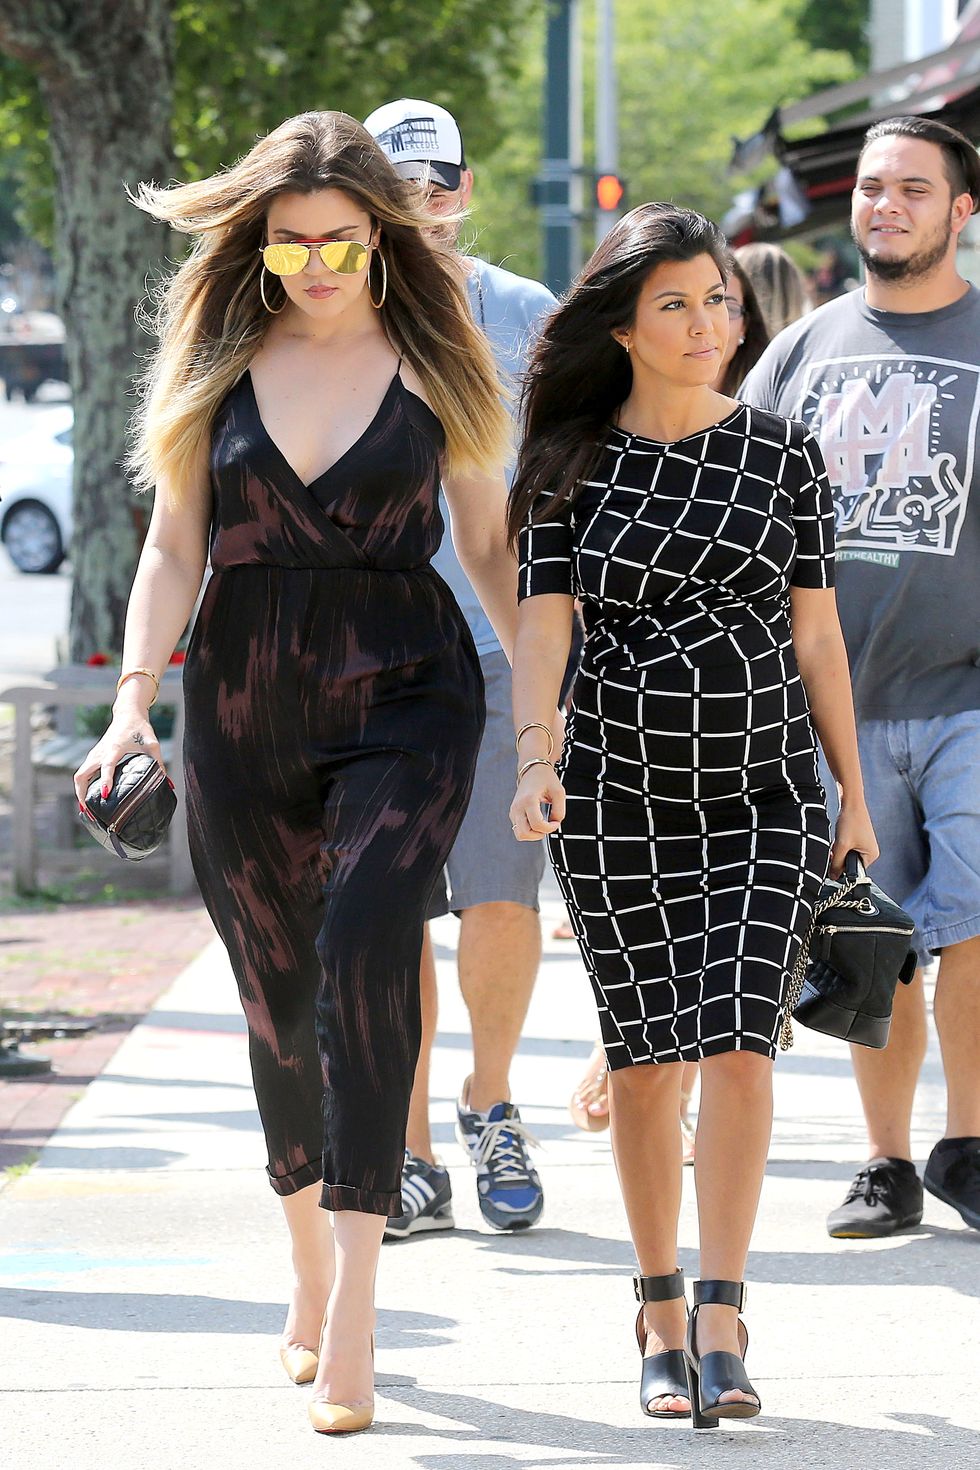 Kourtney Kardashian looks chic walking with Khloe in the Hamptons - celebrity maternity style - fashion - cosmopolitan.co.uk